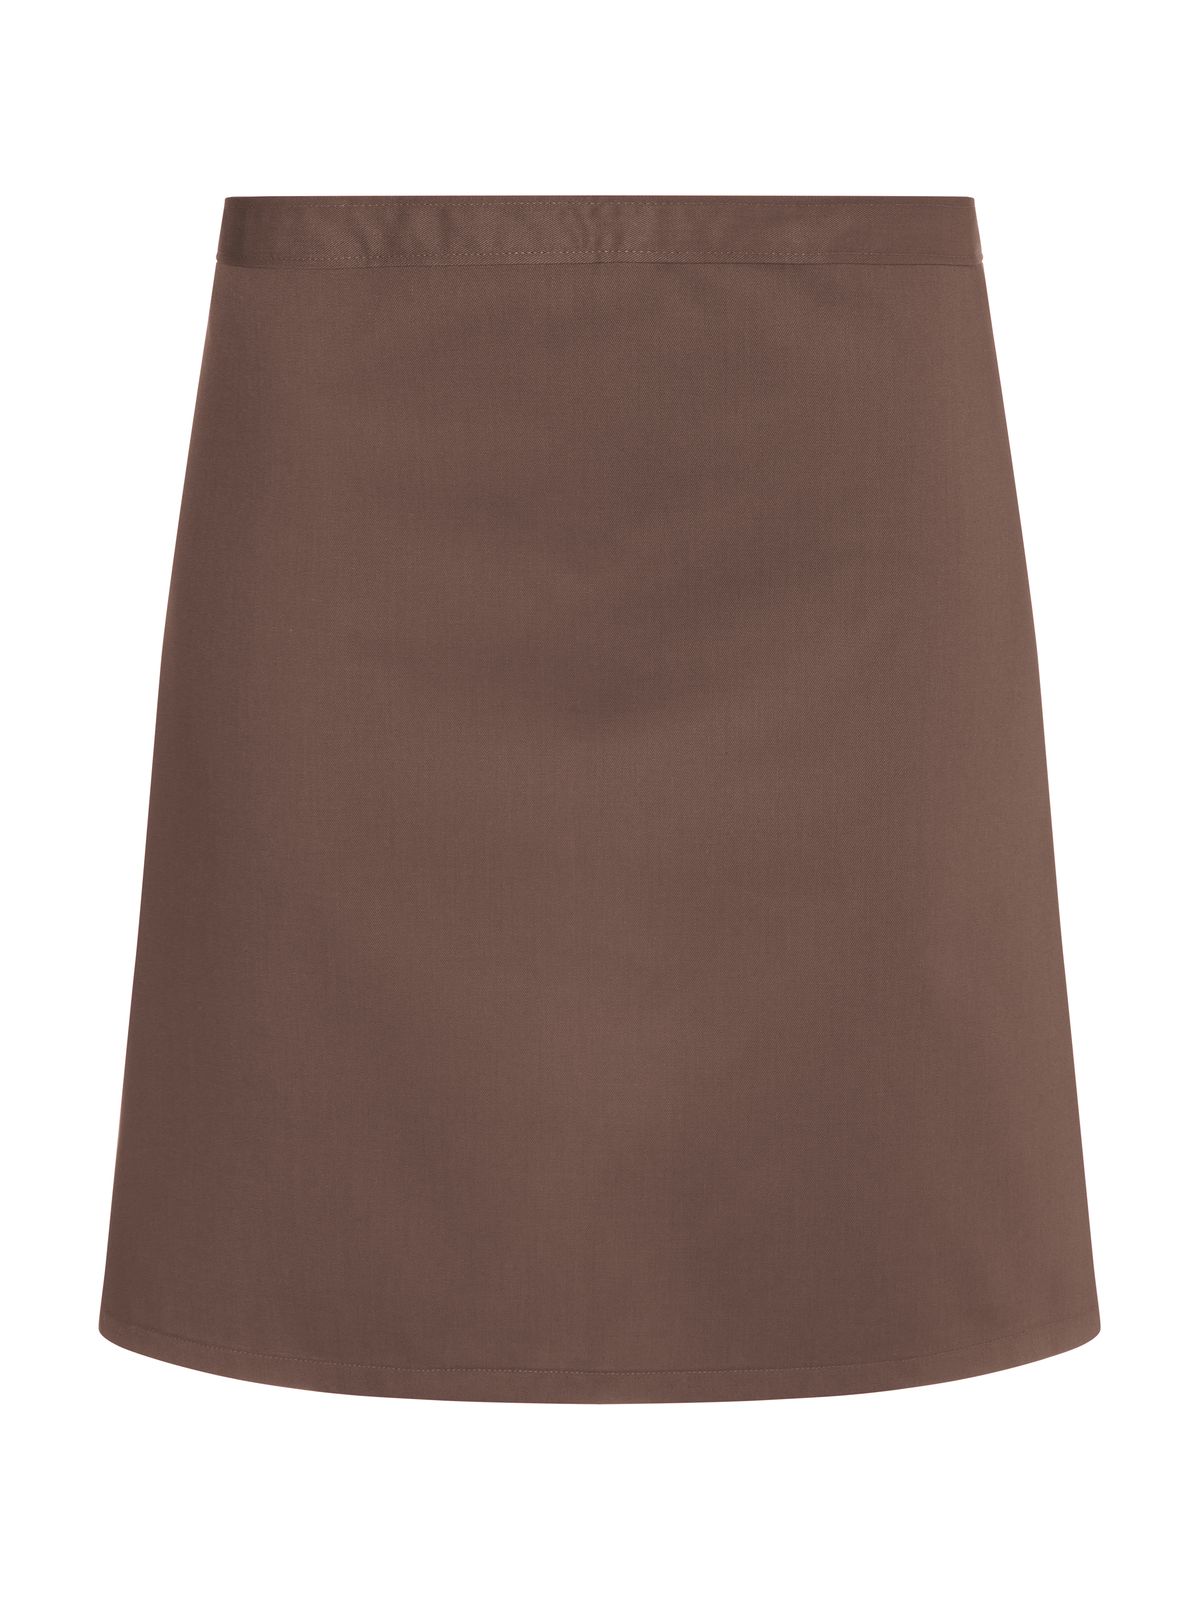 apron-basic-light-brown.webp